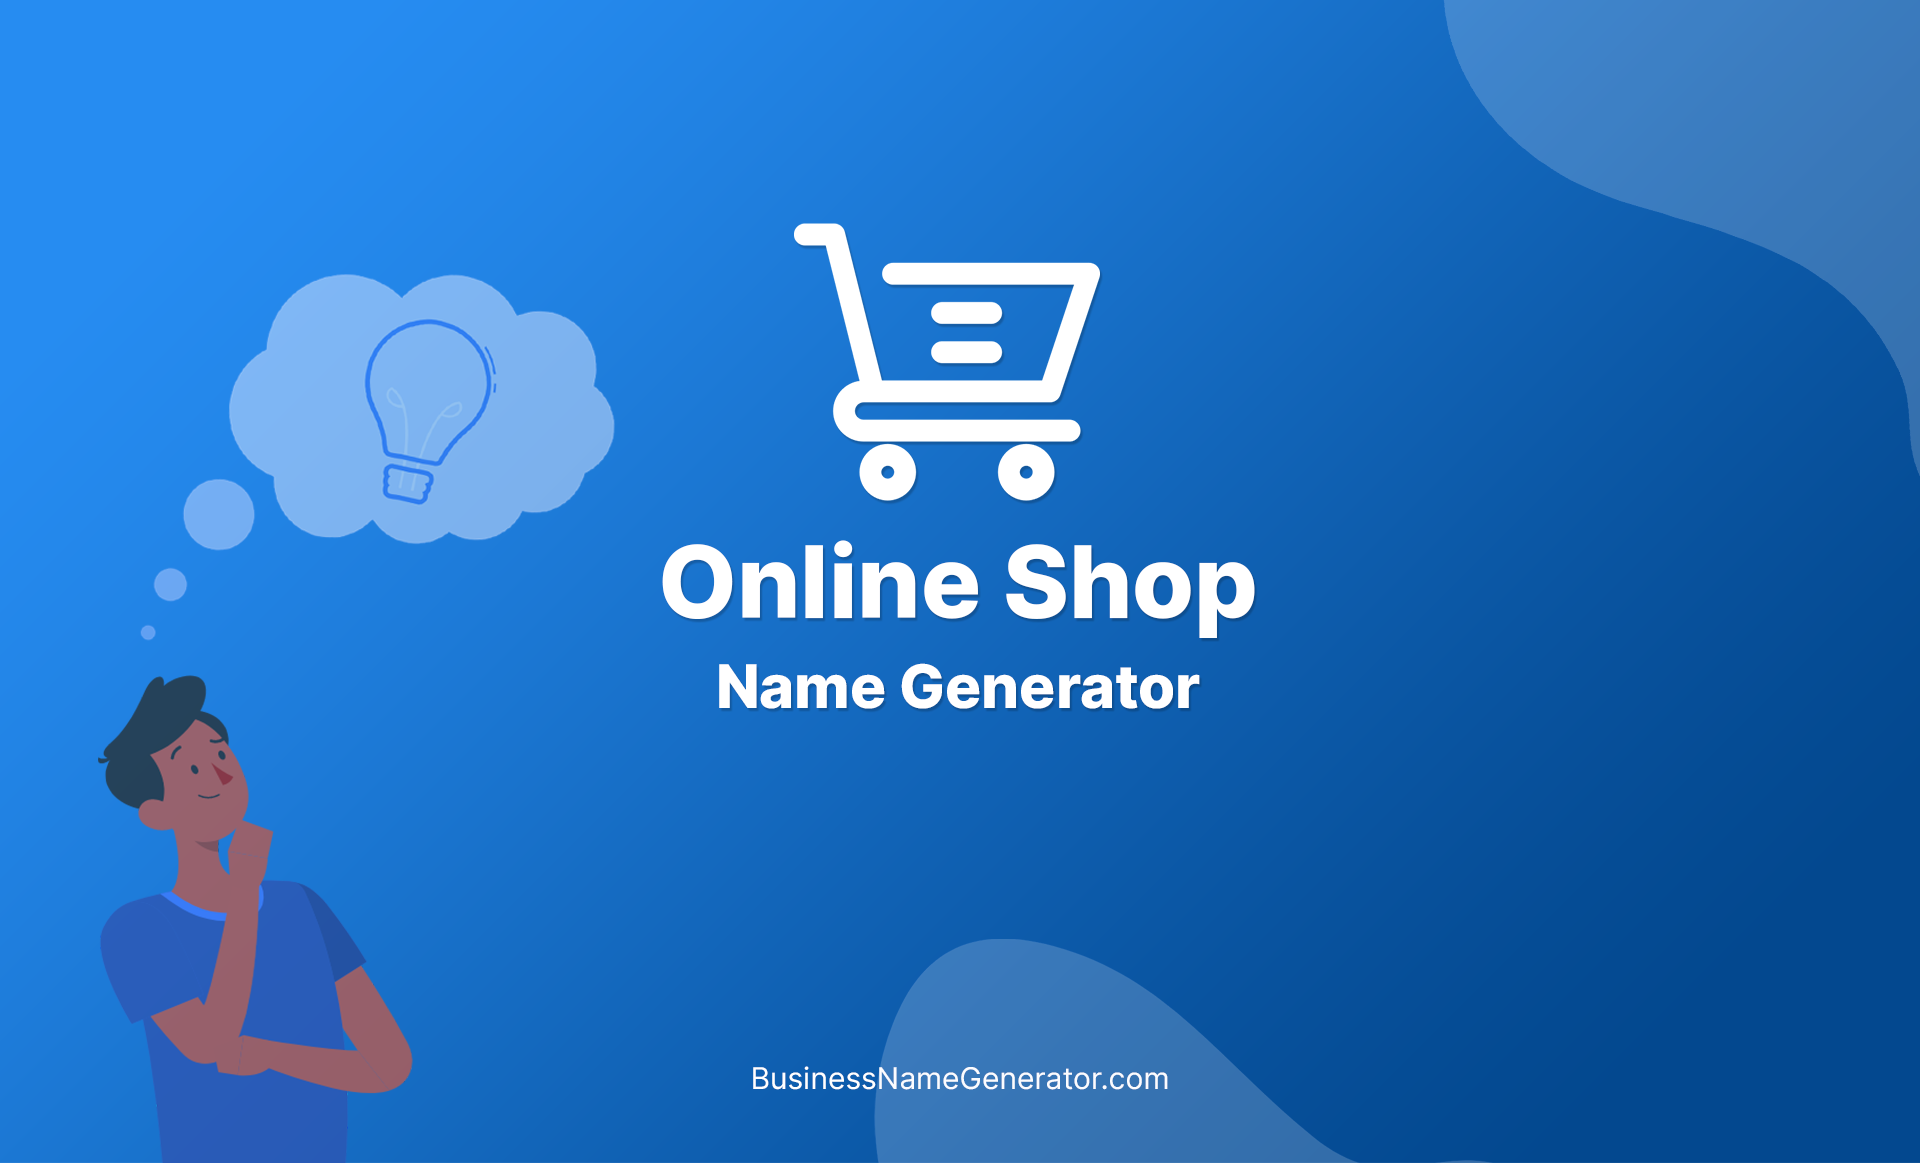 Online Shop Name Generator